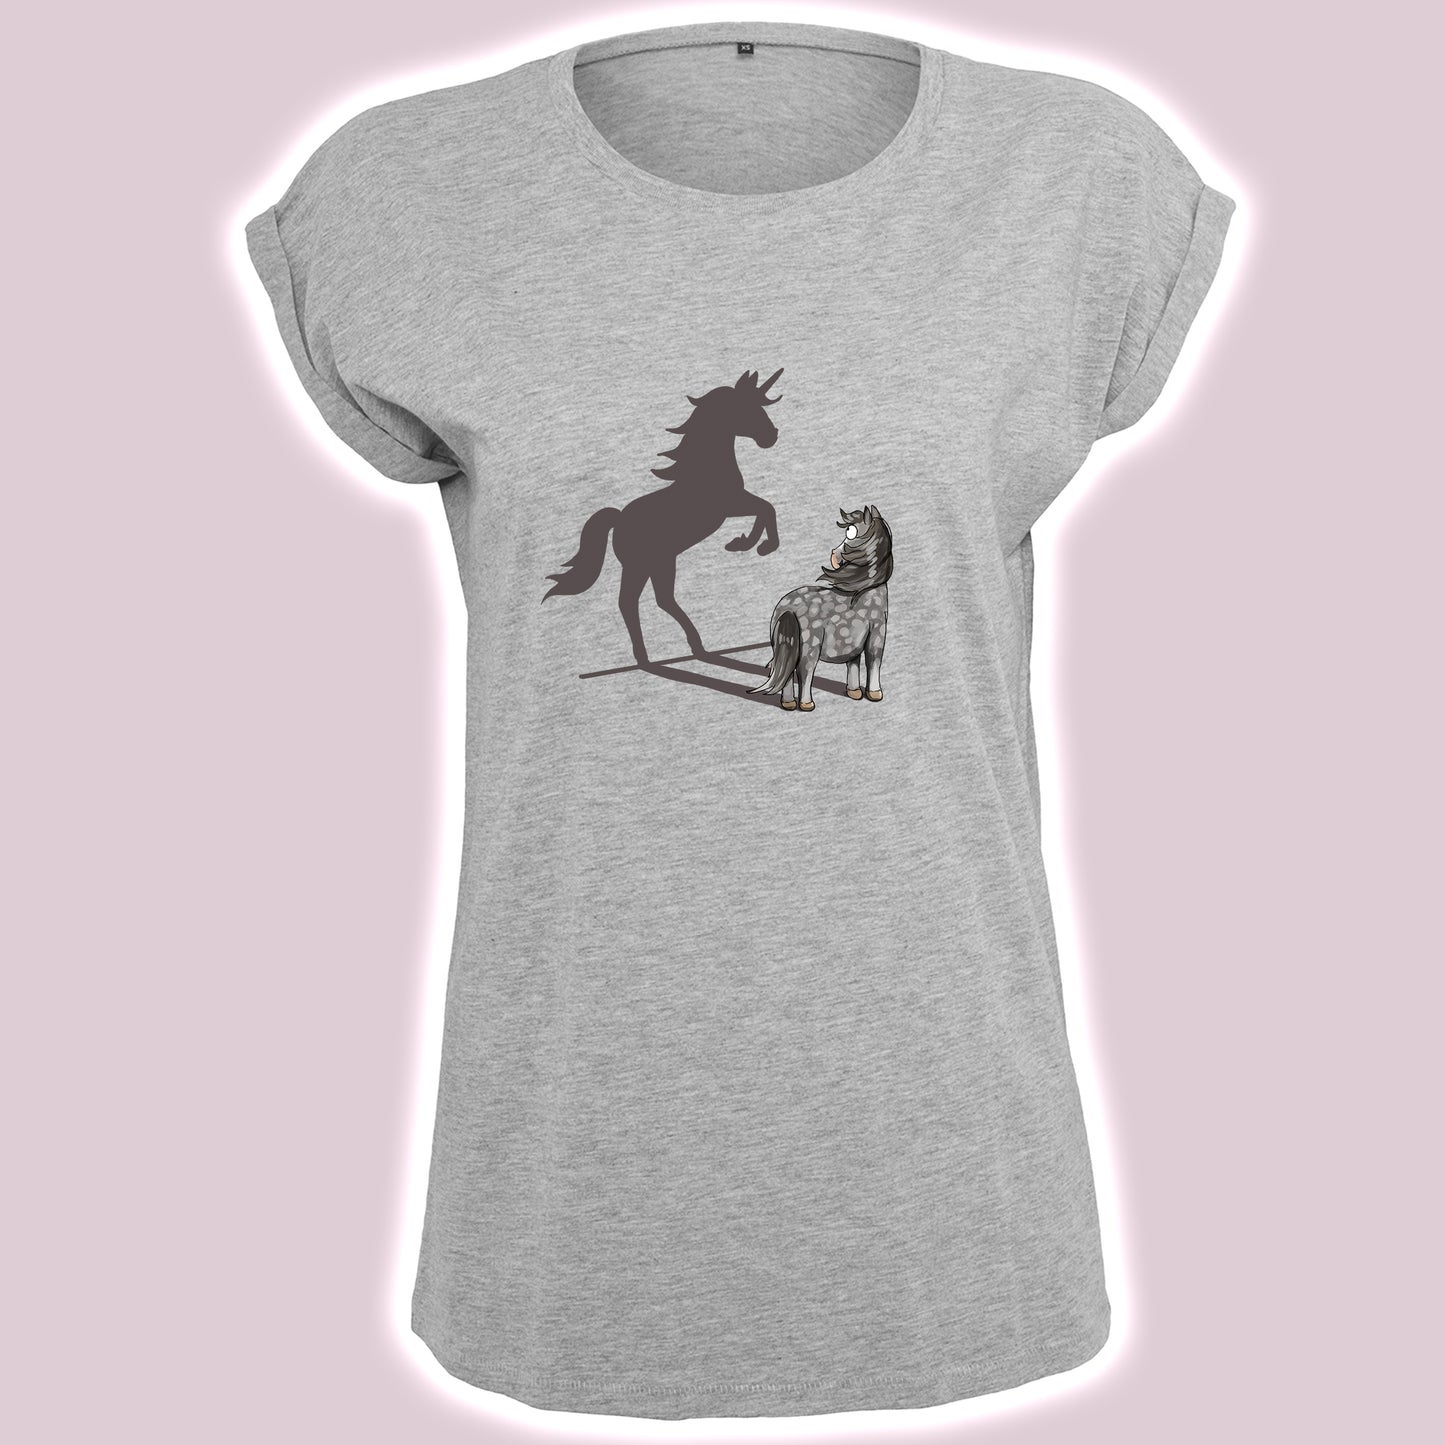 Equiboodle Emily Cole Hotshot T Shirt - Believe In Yourself - Dapple Grey